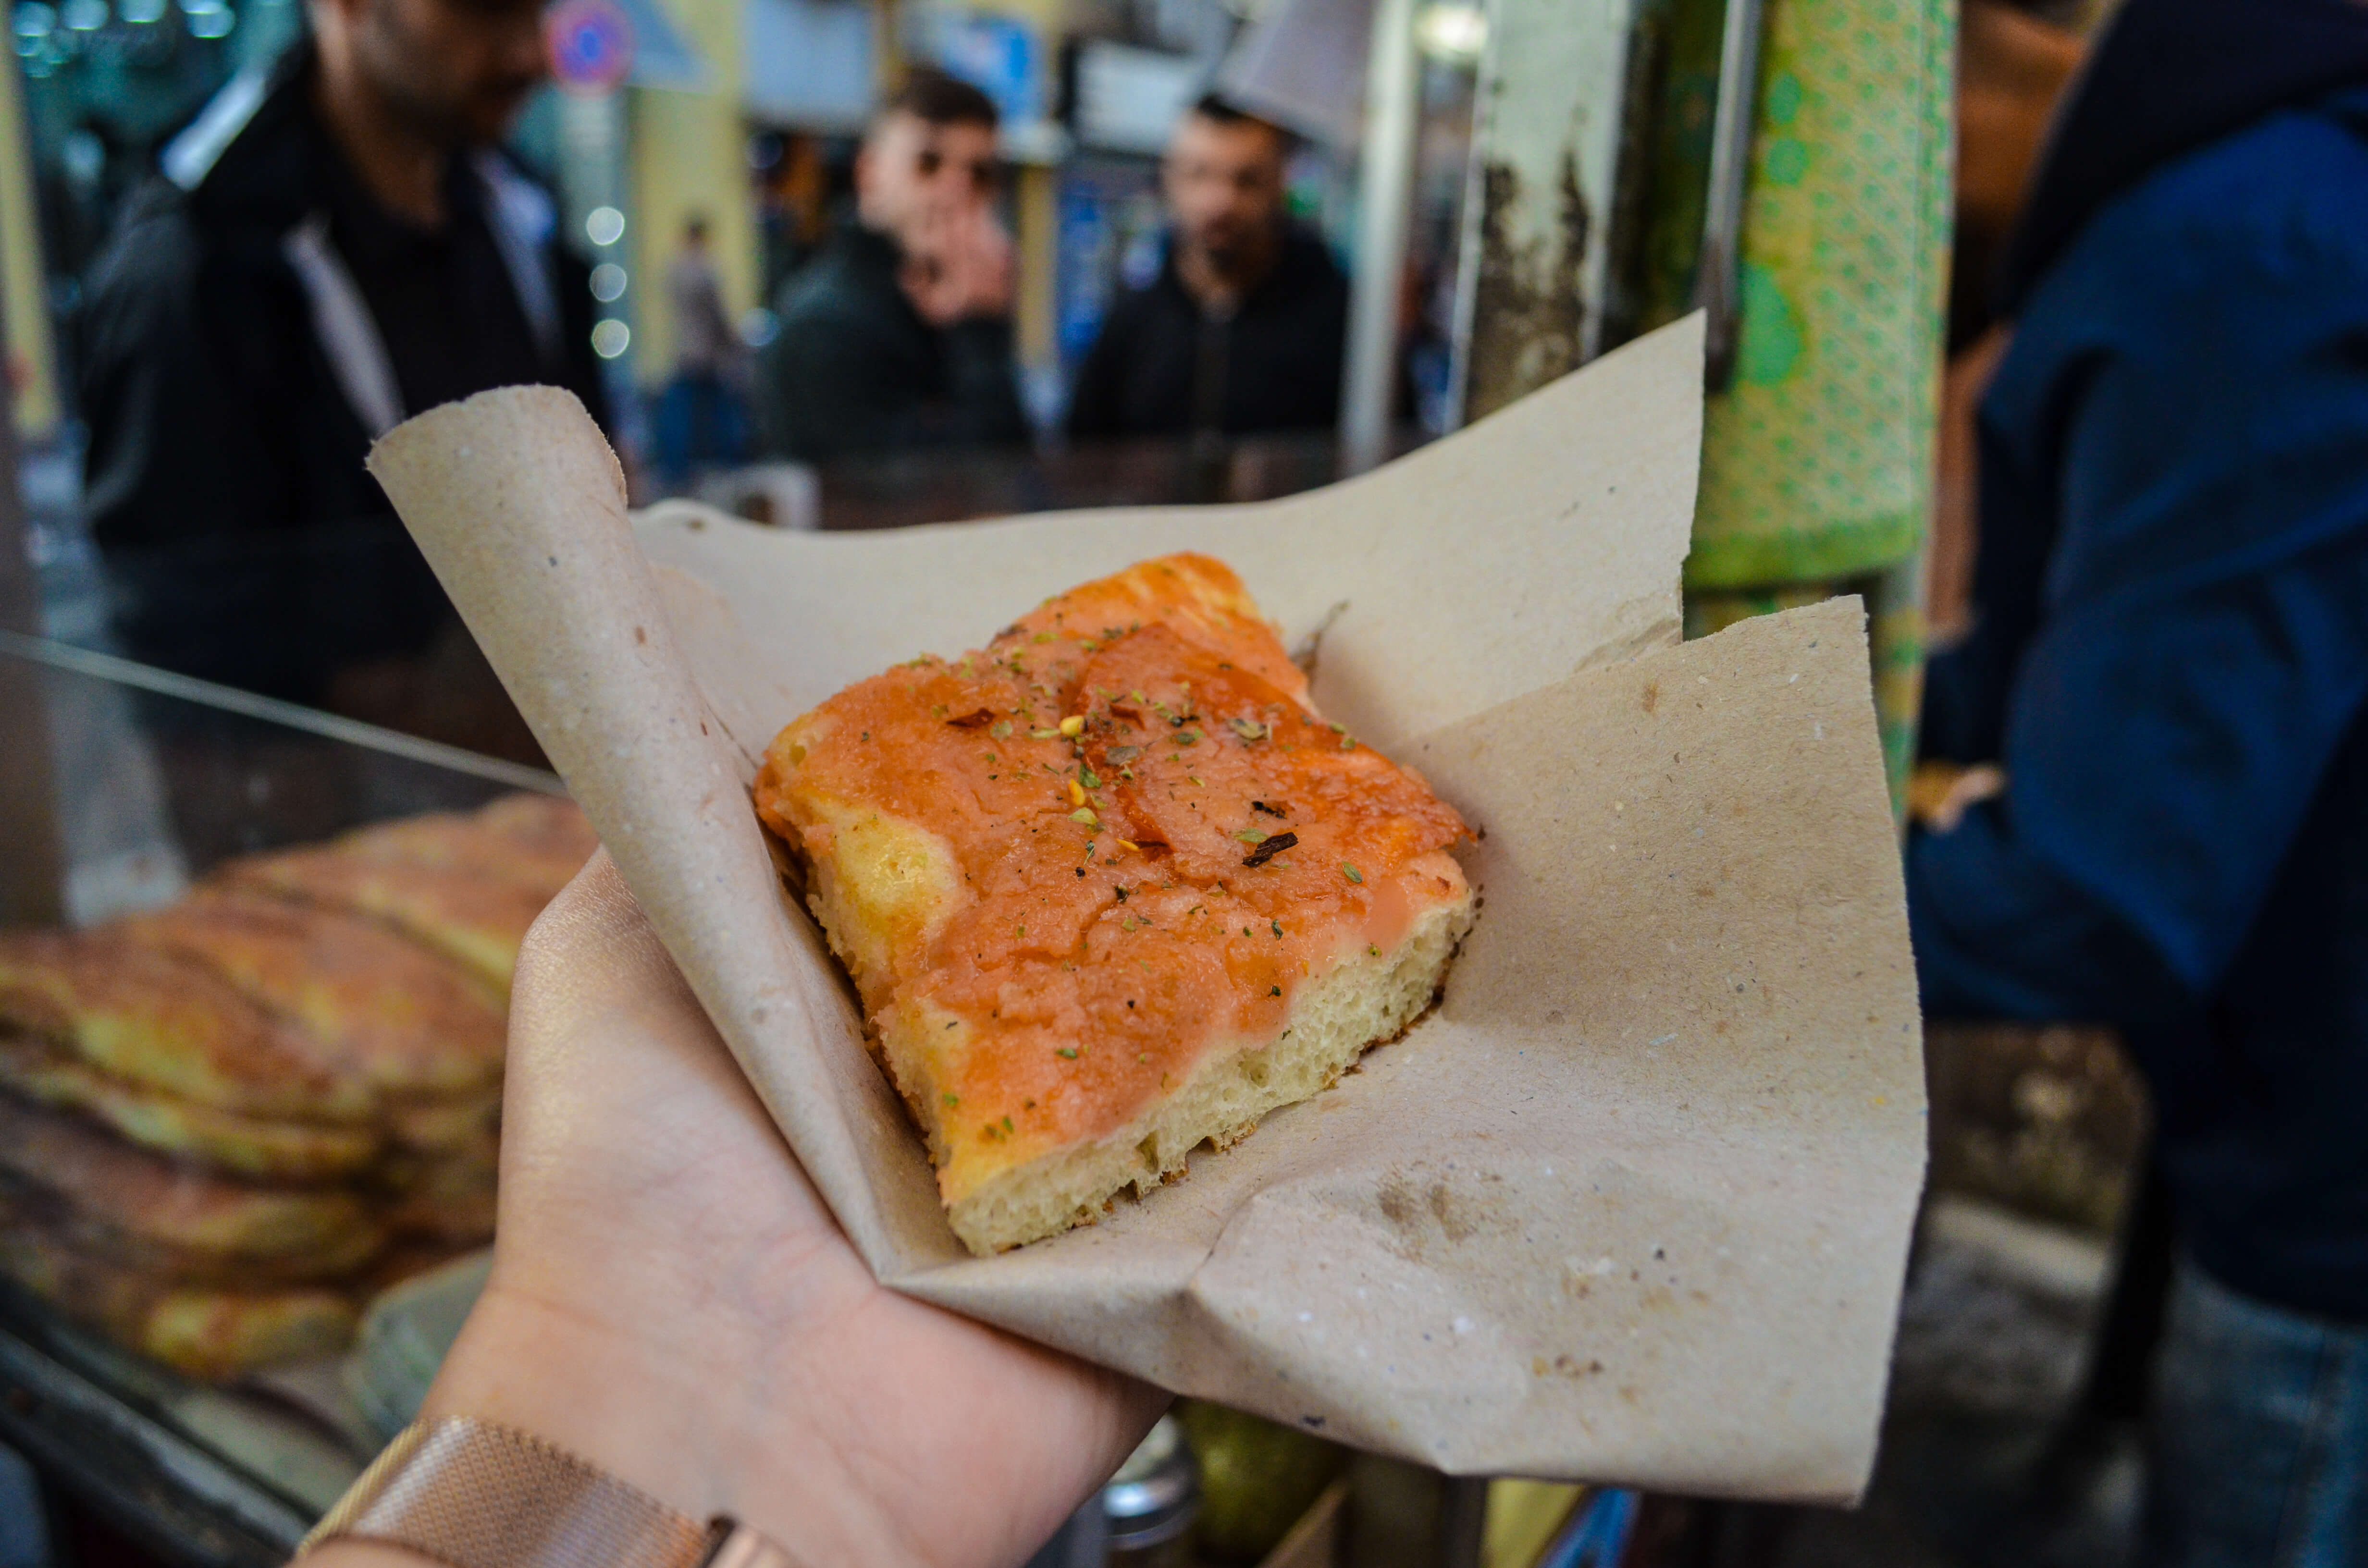 Palermo street food tour with Streaty - Sfincionello